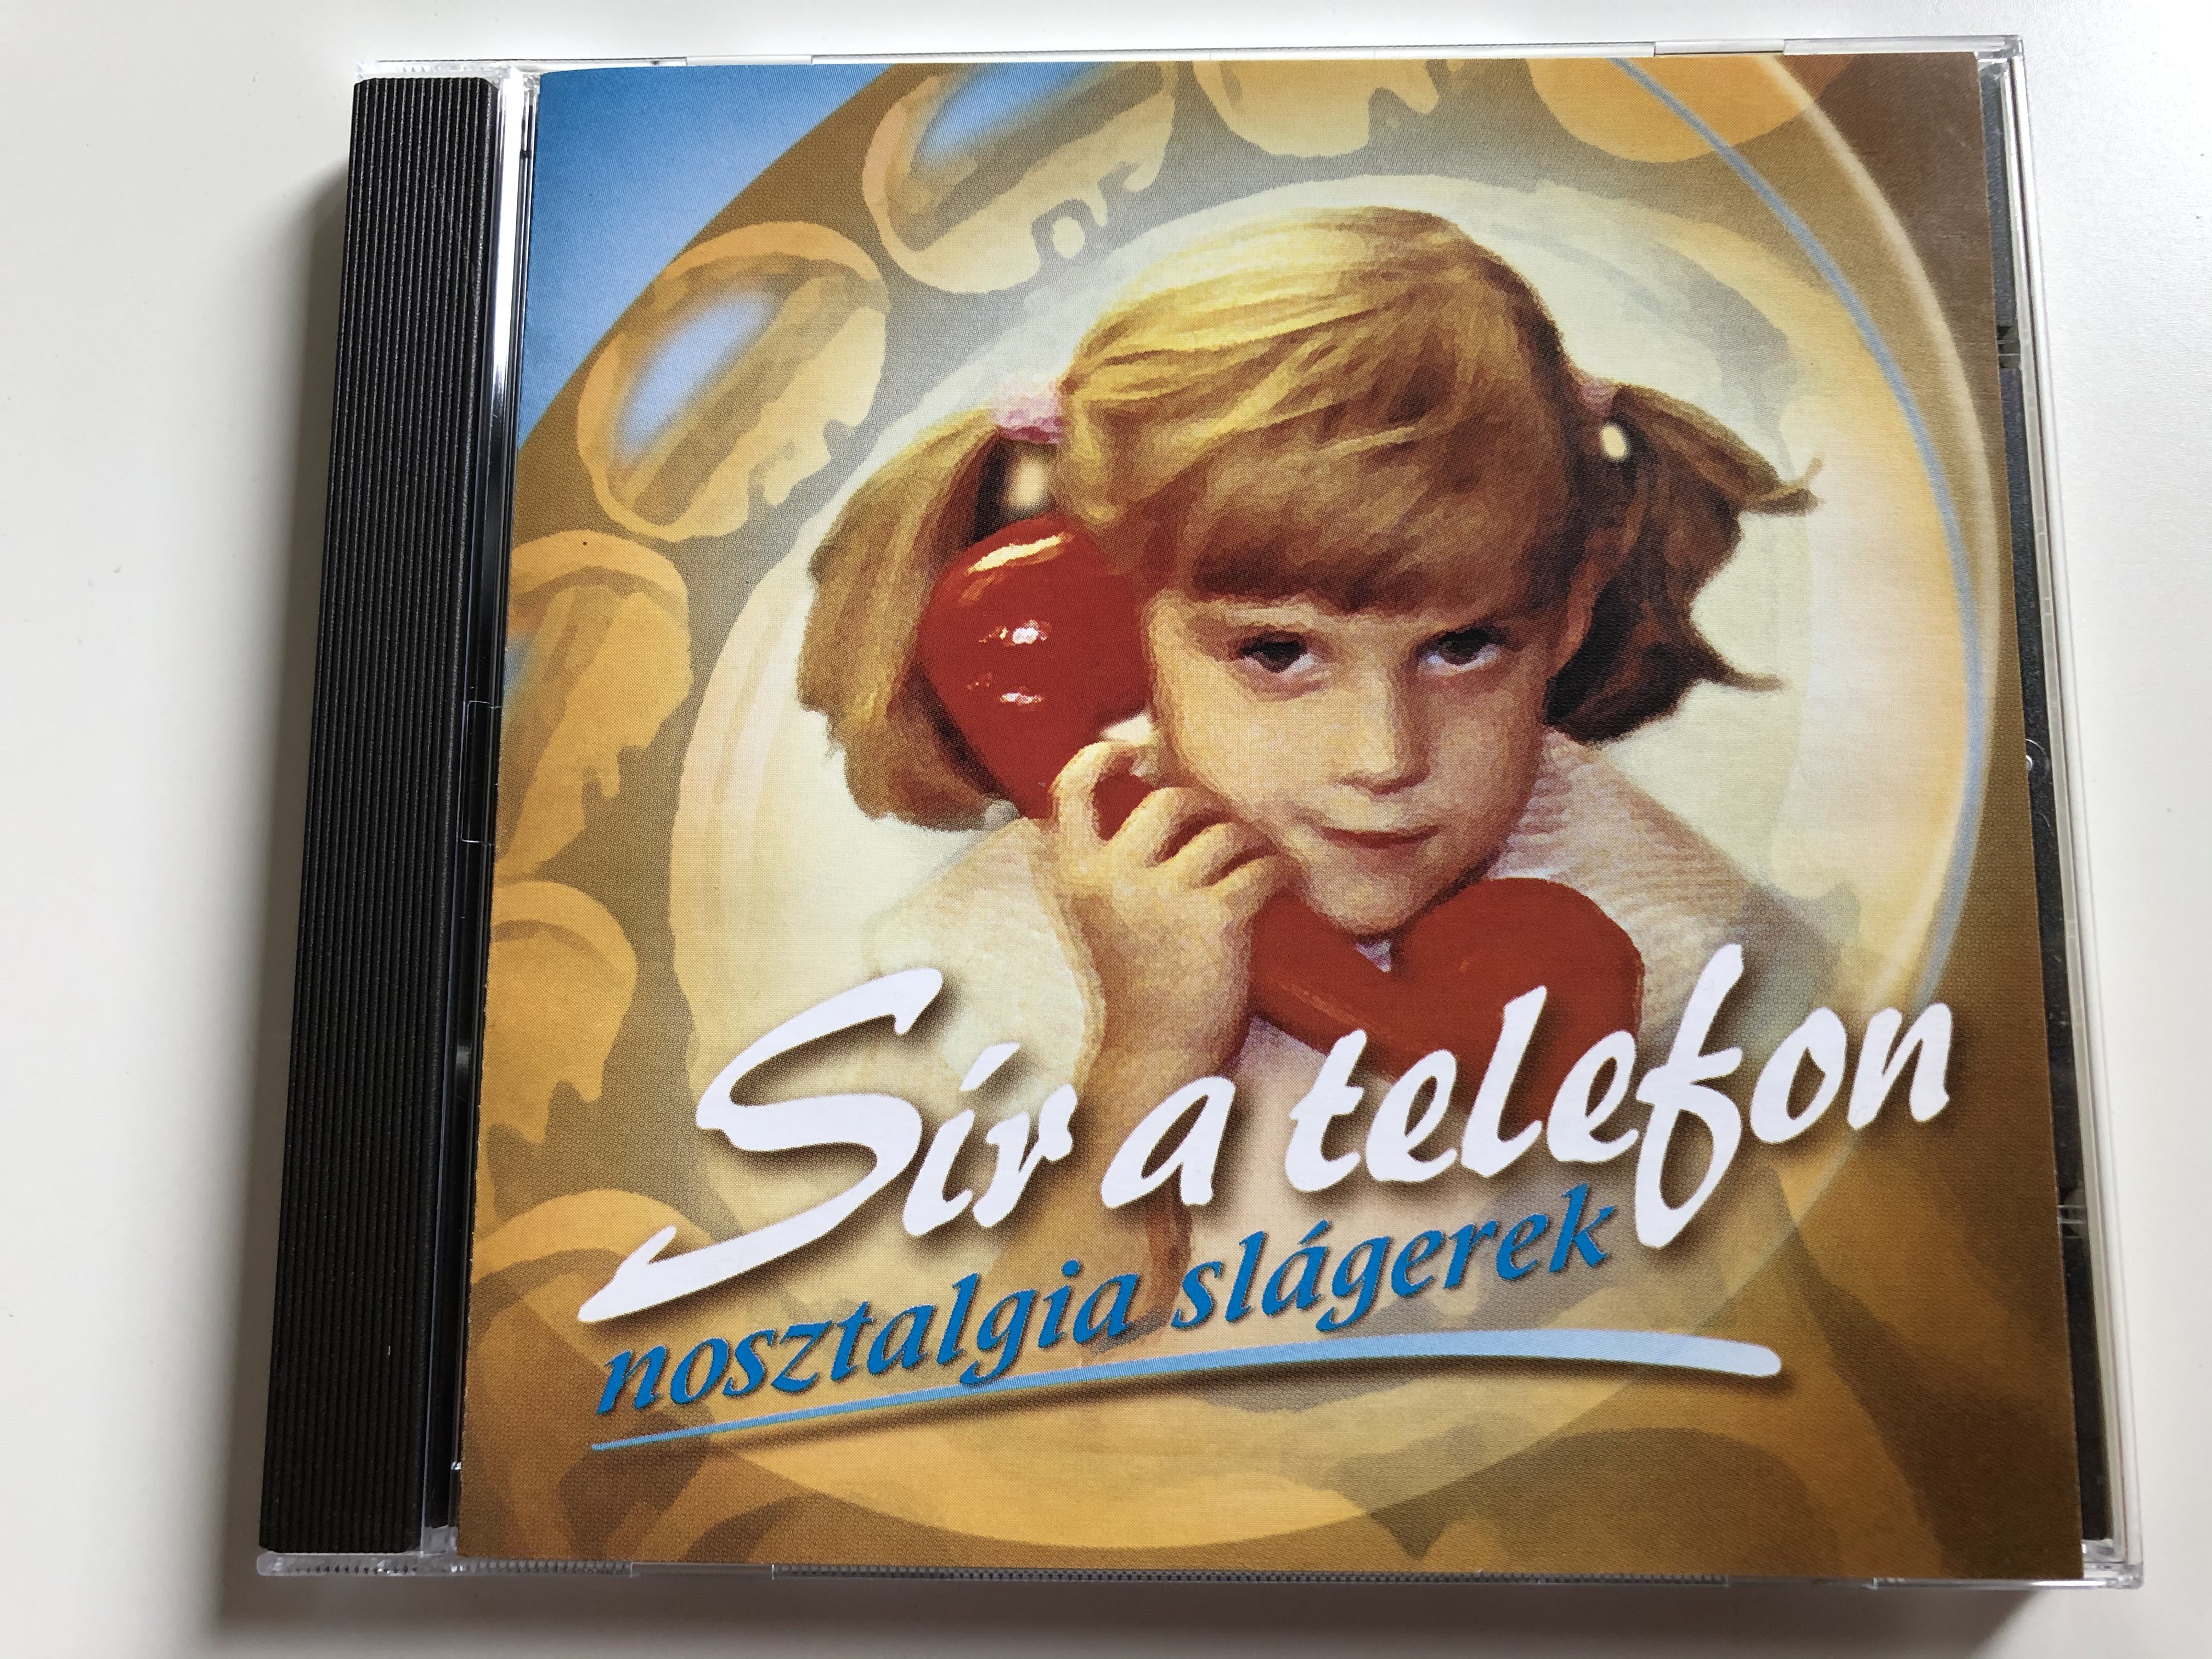 s-r-a-telefon-nosztalgia-sl-gerek-hungaroton-audio-cd-2000-hcd-71021-1-.jpg